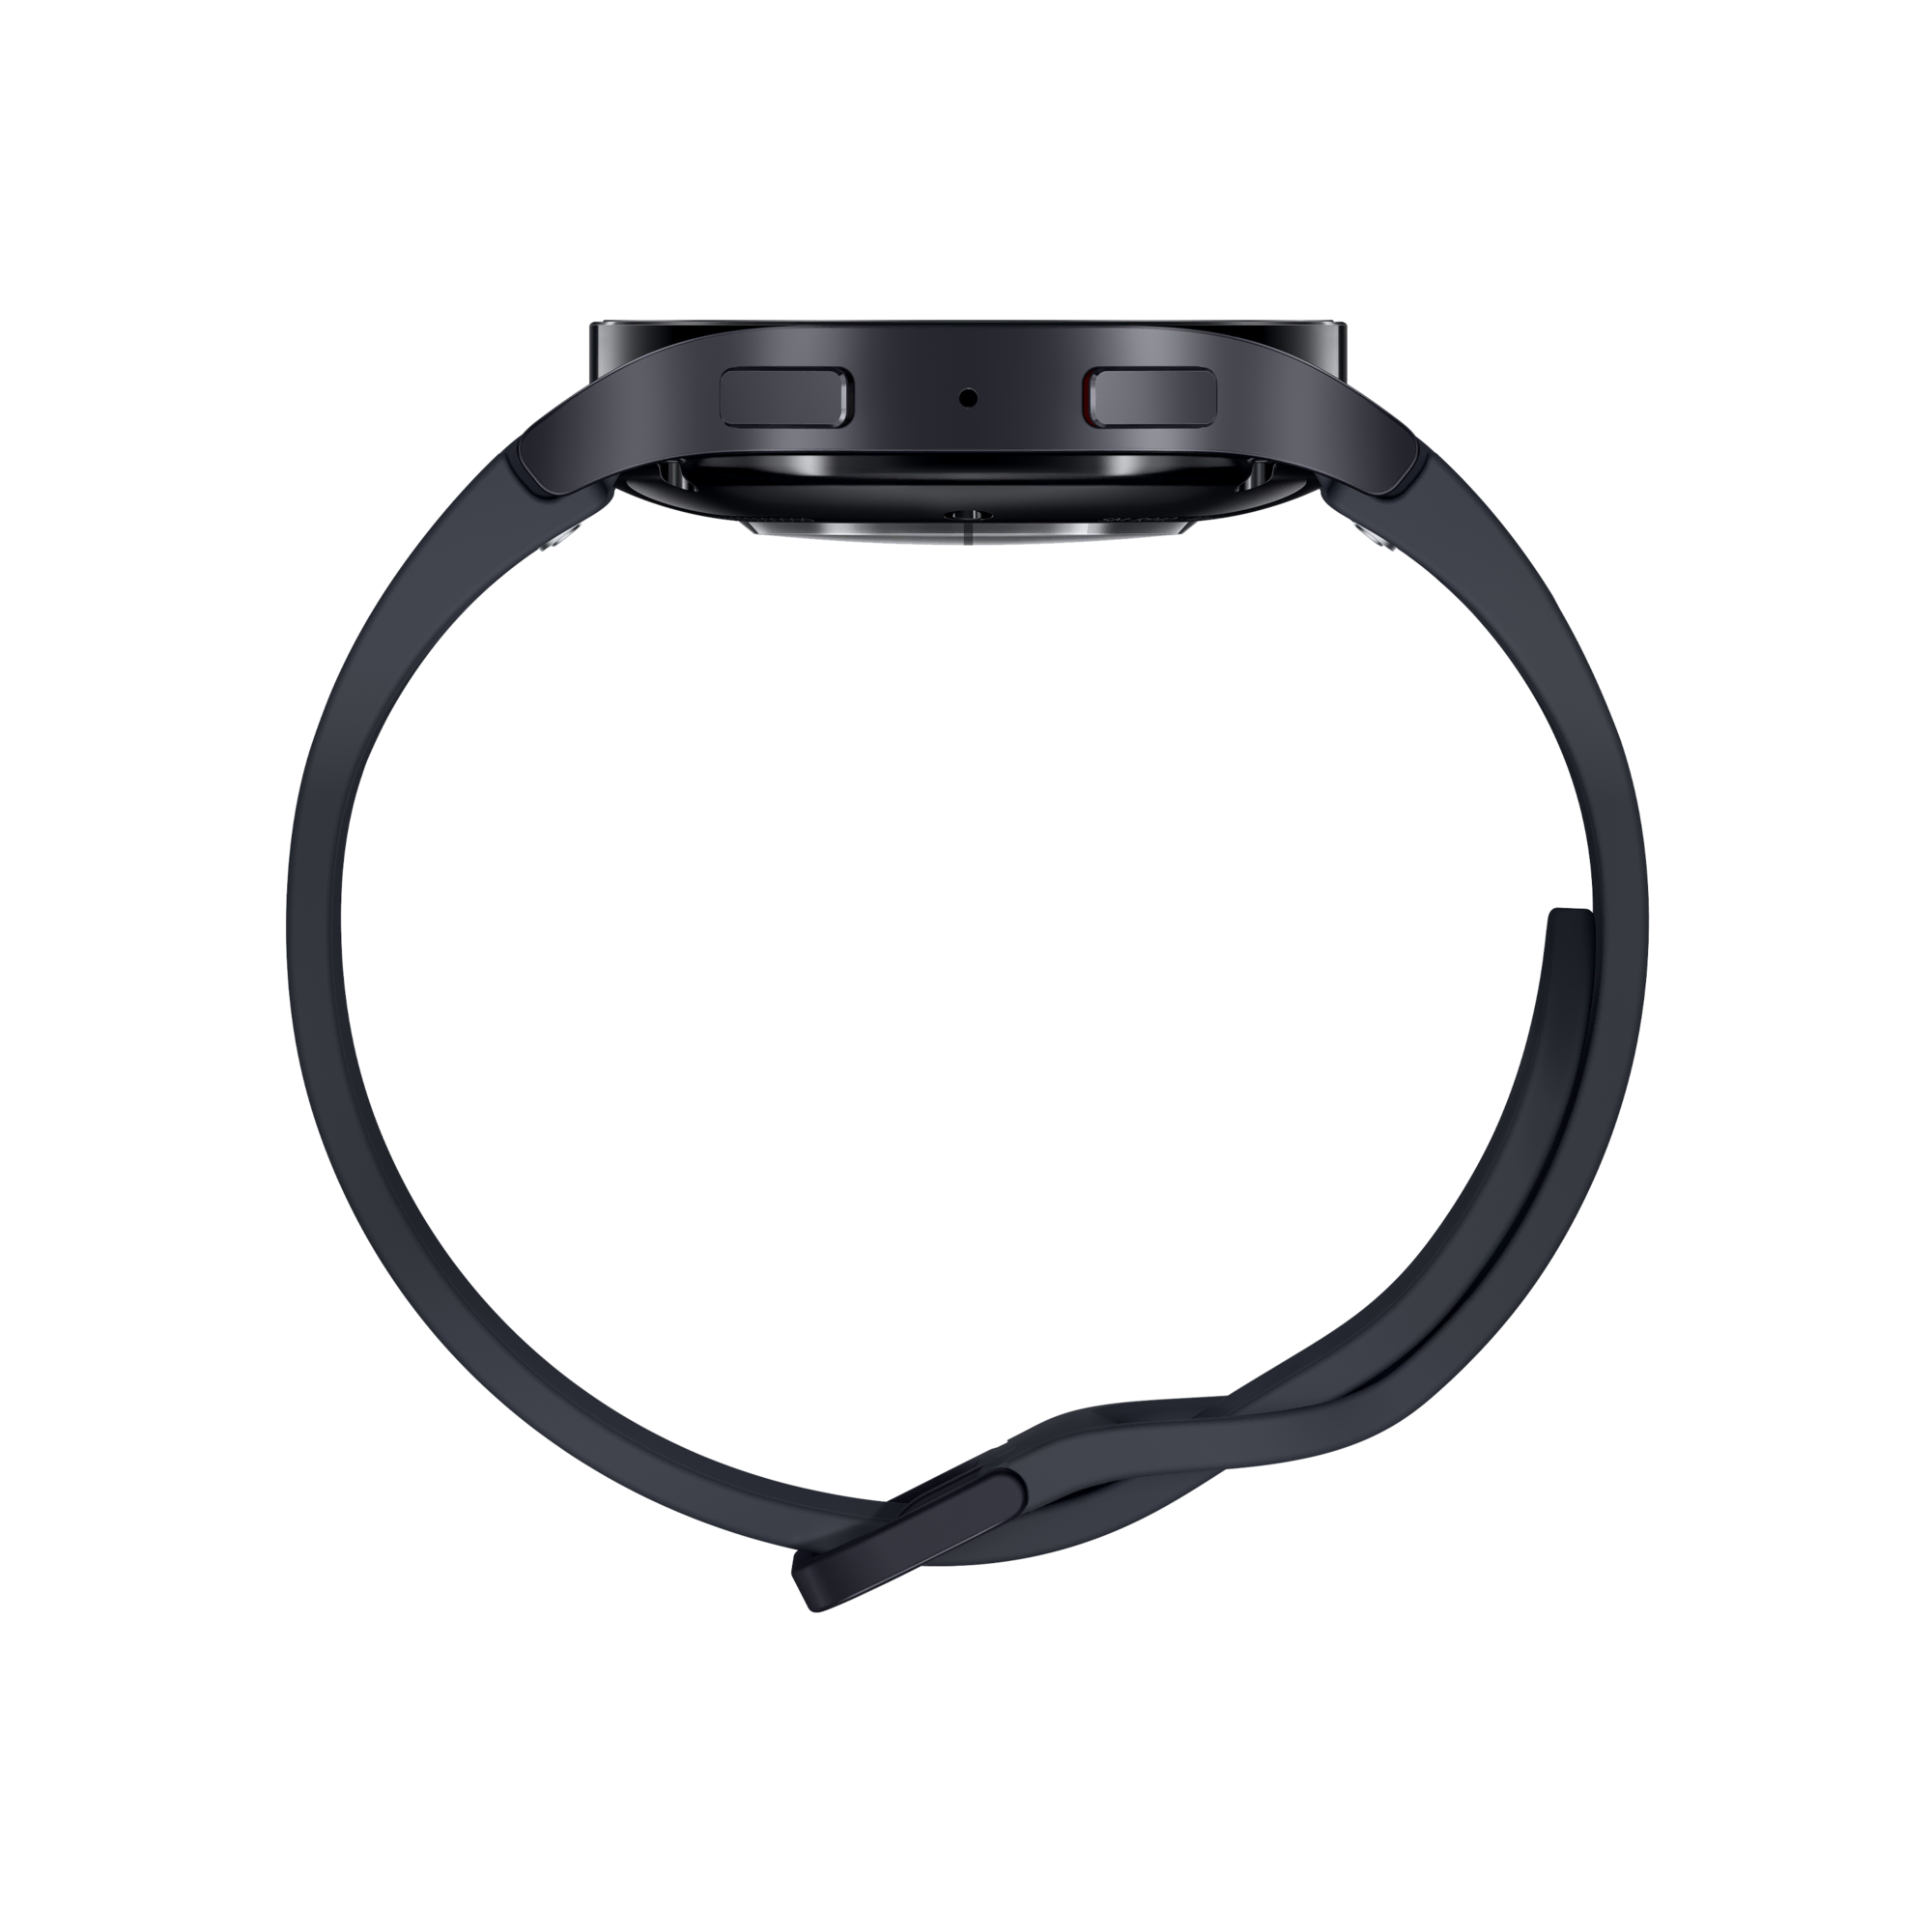 SAMSUNG Watch 6 (44mm) Siyah Akıllı Saat